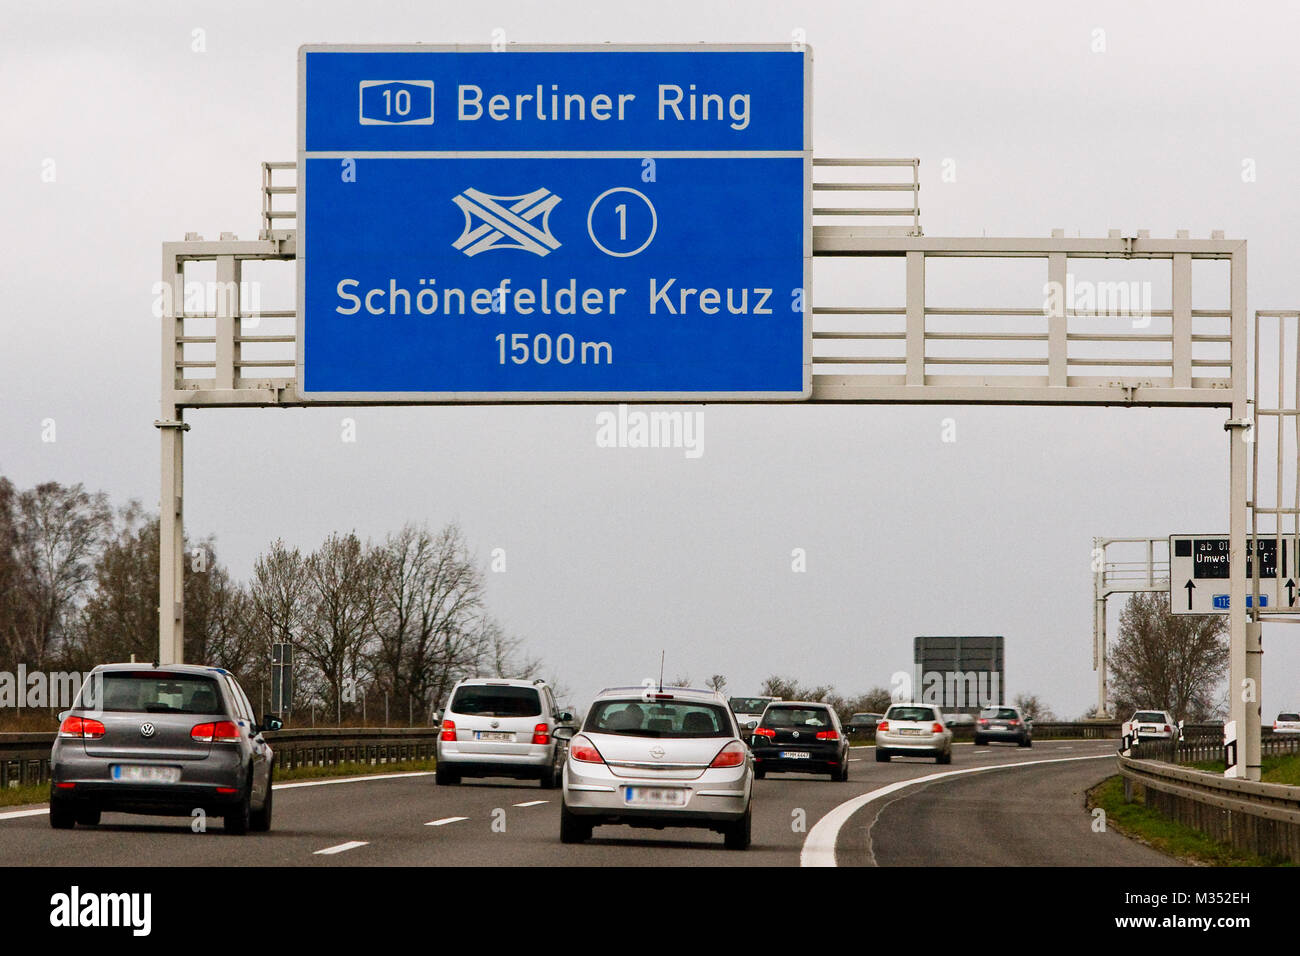 Autobahn BAB 10 Berliner Ring Stock Photo - Alamy